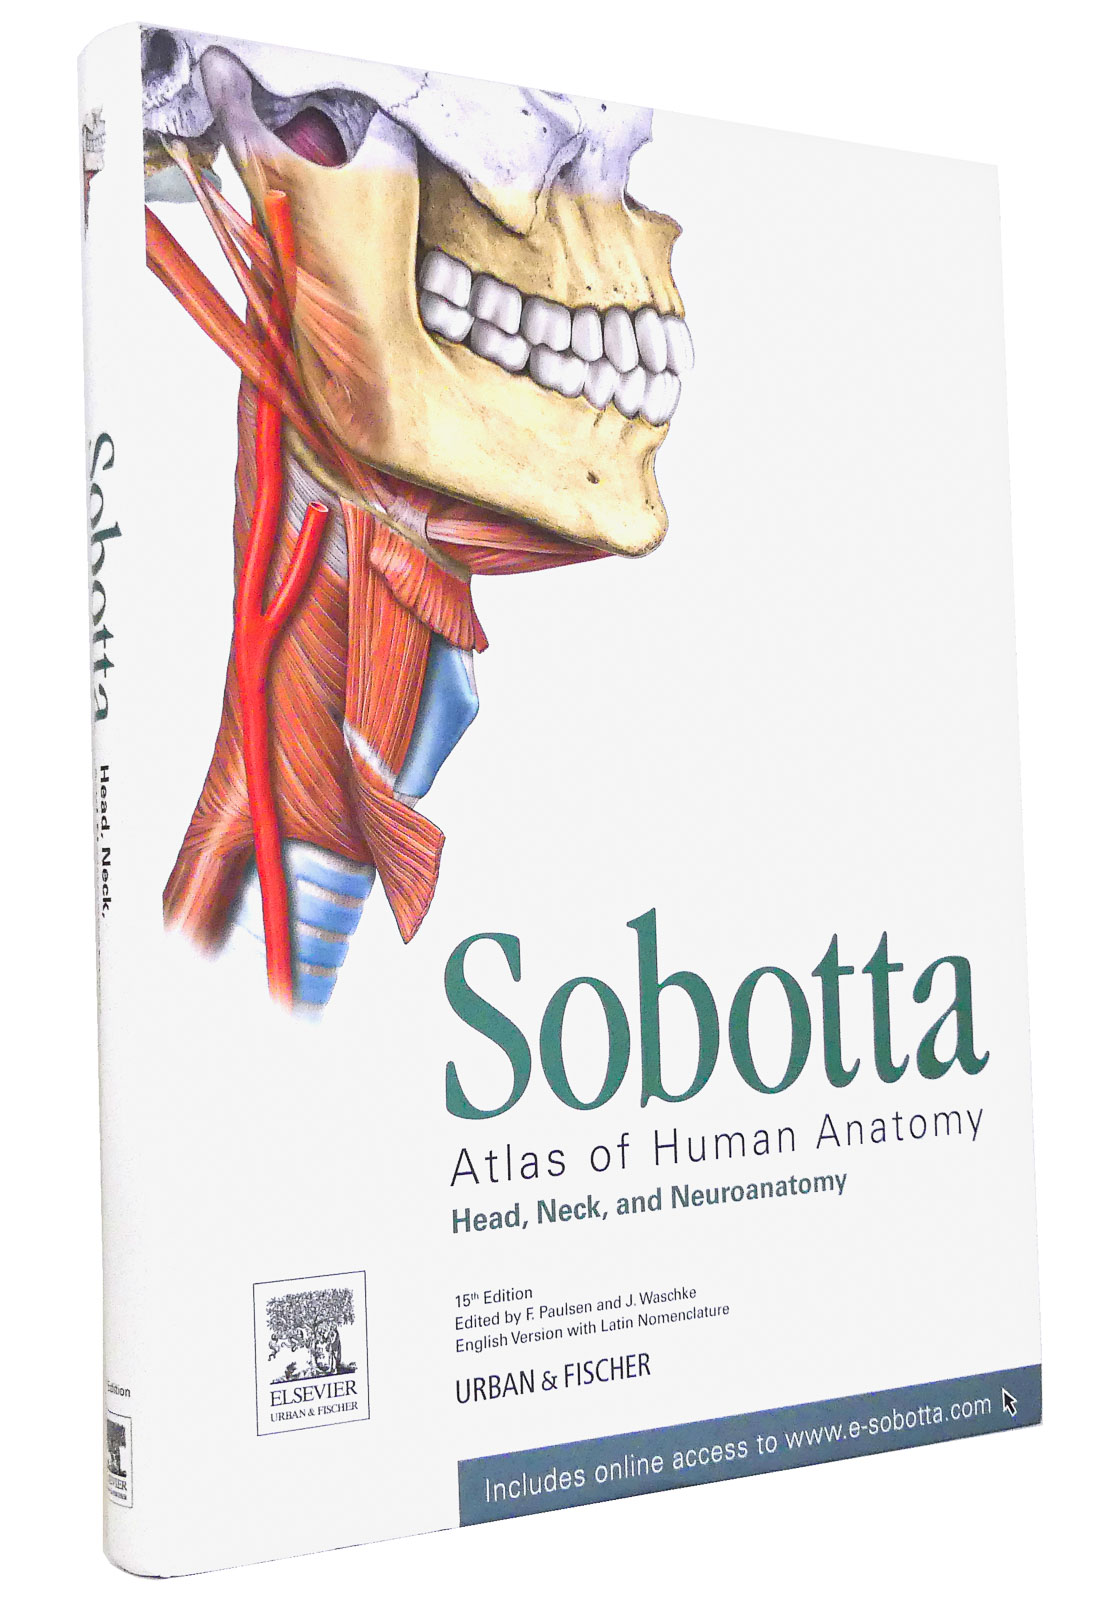 Sobotta (Volume 3) - Atlas of Human Anatomy: Head, Neck, and Neuroanatomy (English Version with Latin Nomenclature) - Paulsen, Friedrich [Hg.]; Waschke, Jens [Hg.]